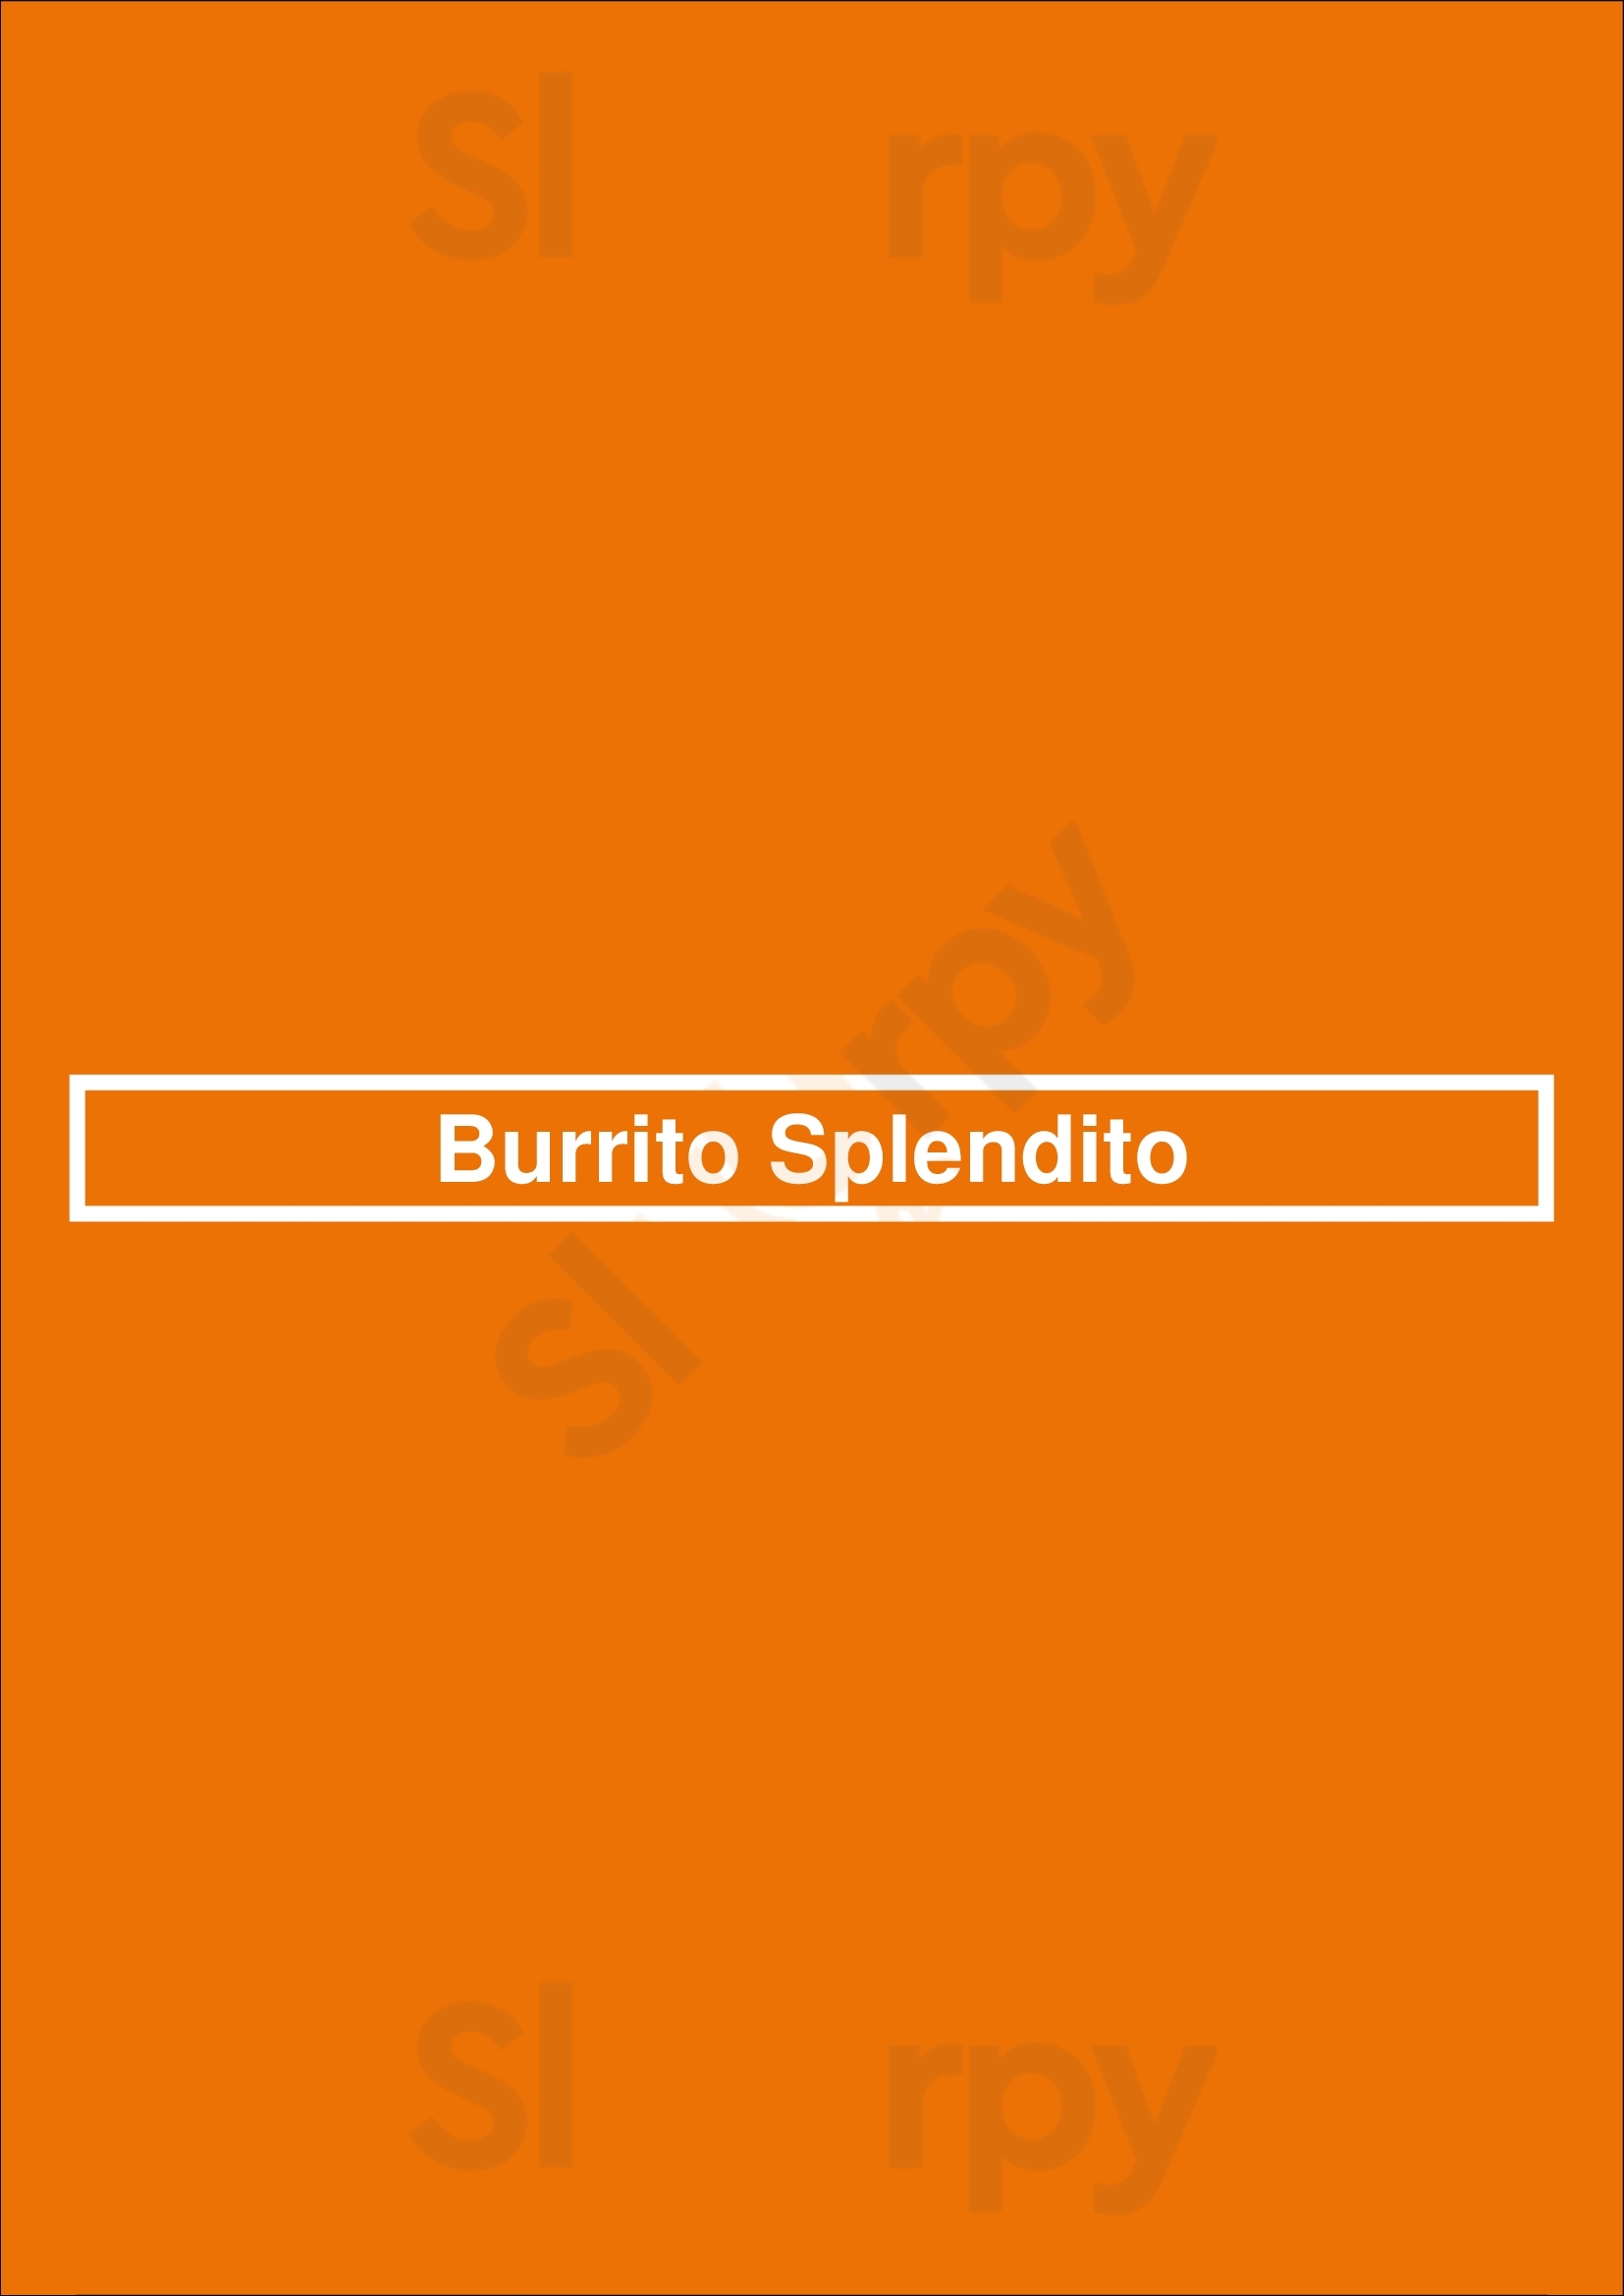 Burrito Splendito Winnipeg Menu - 1